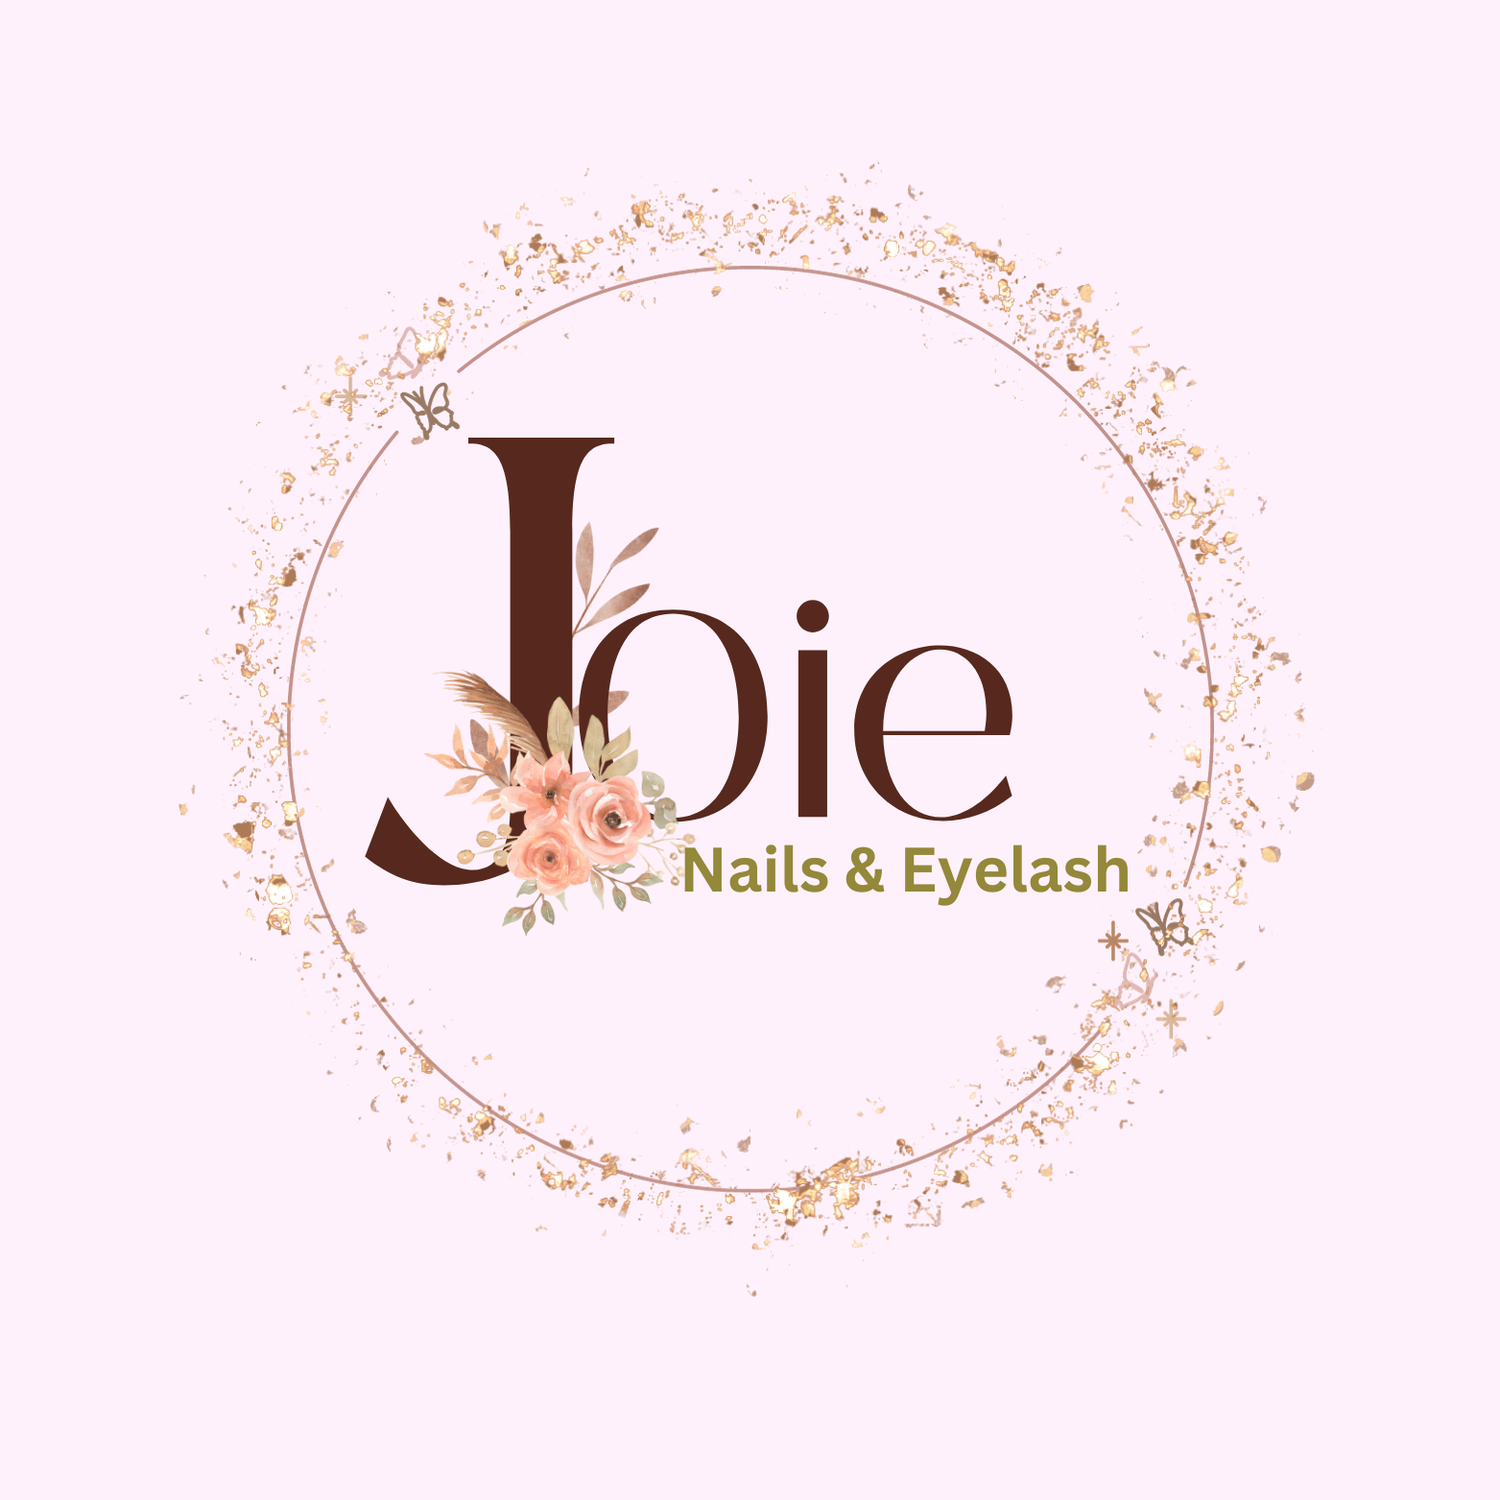 Joie Beauty Salon